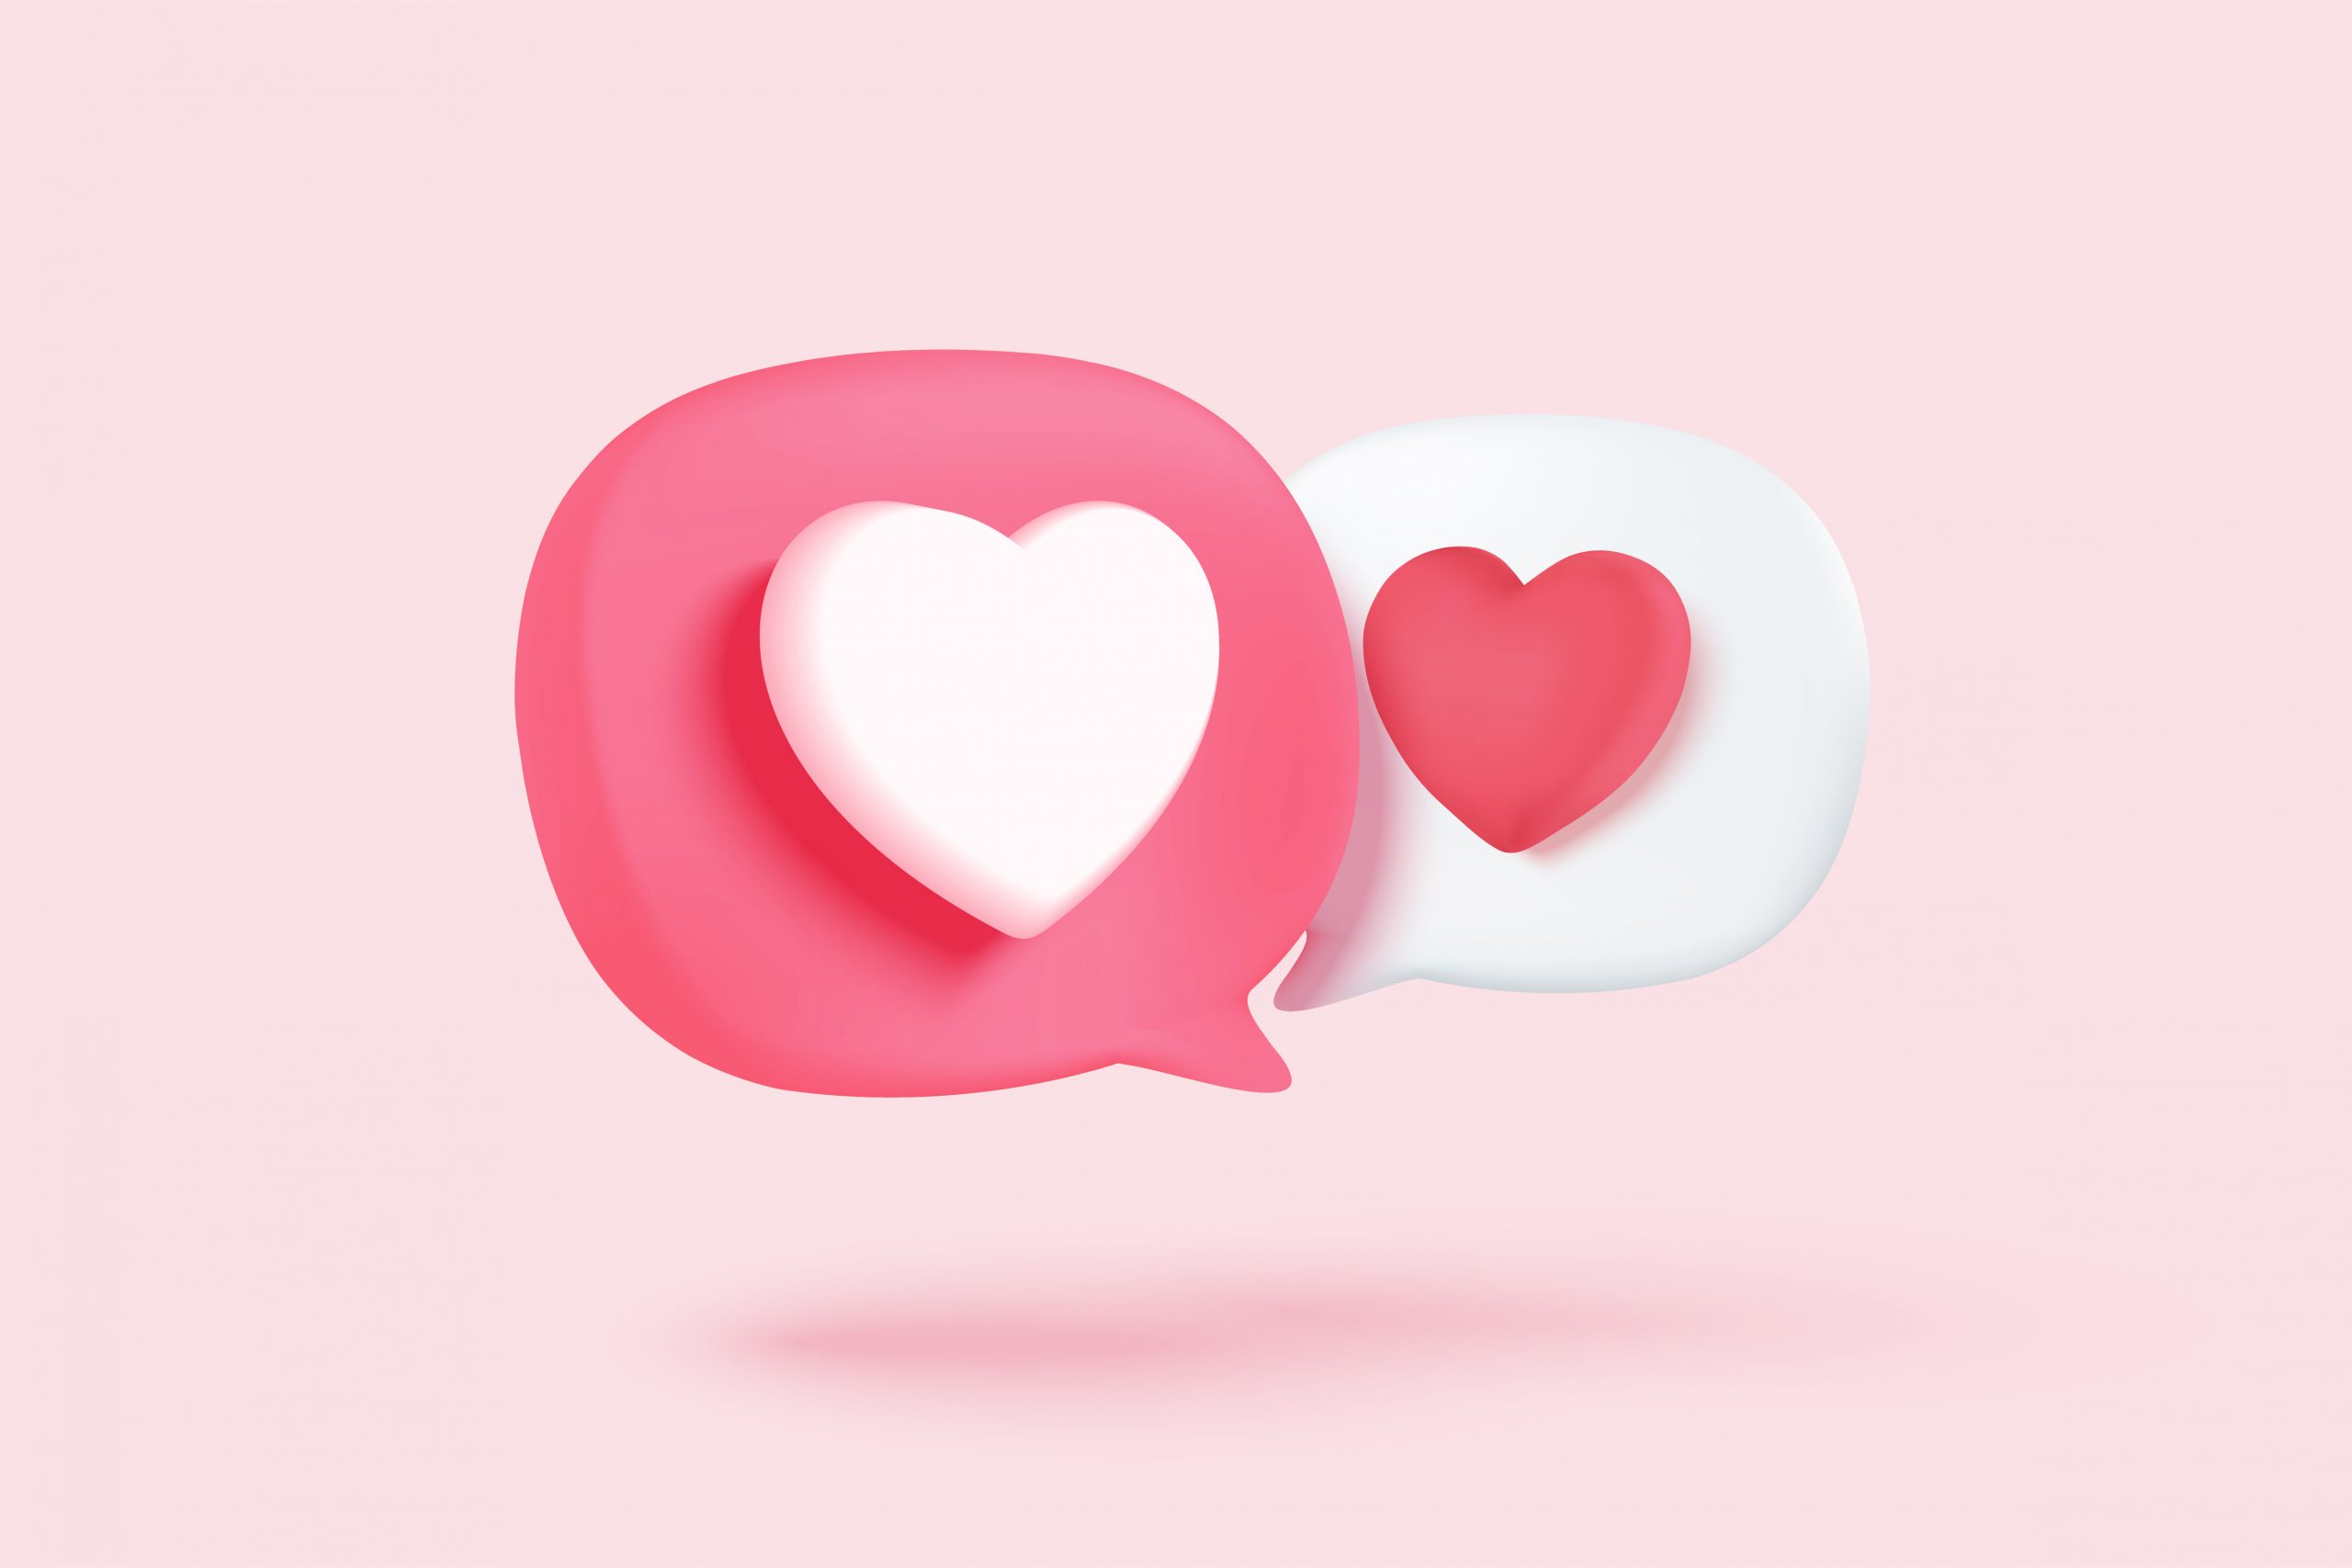 spinning hearts - Discord Emoji